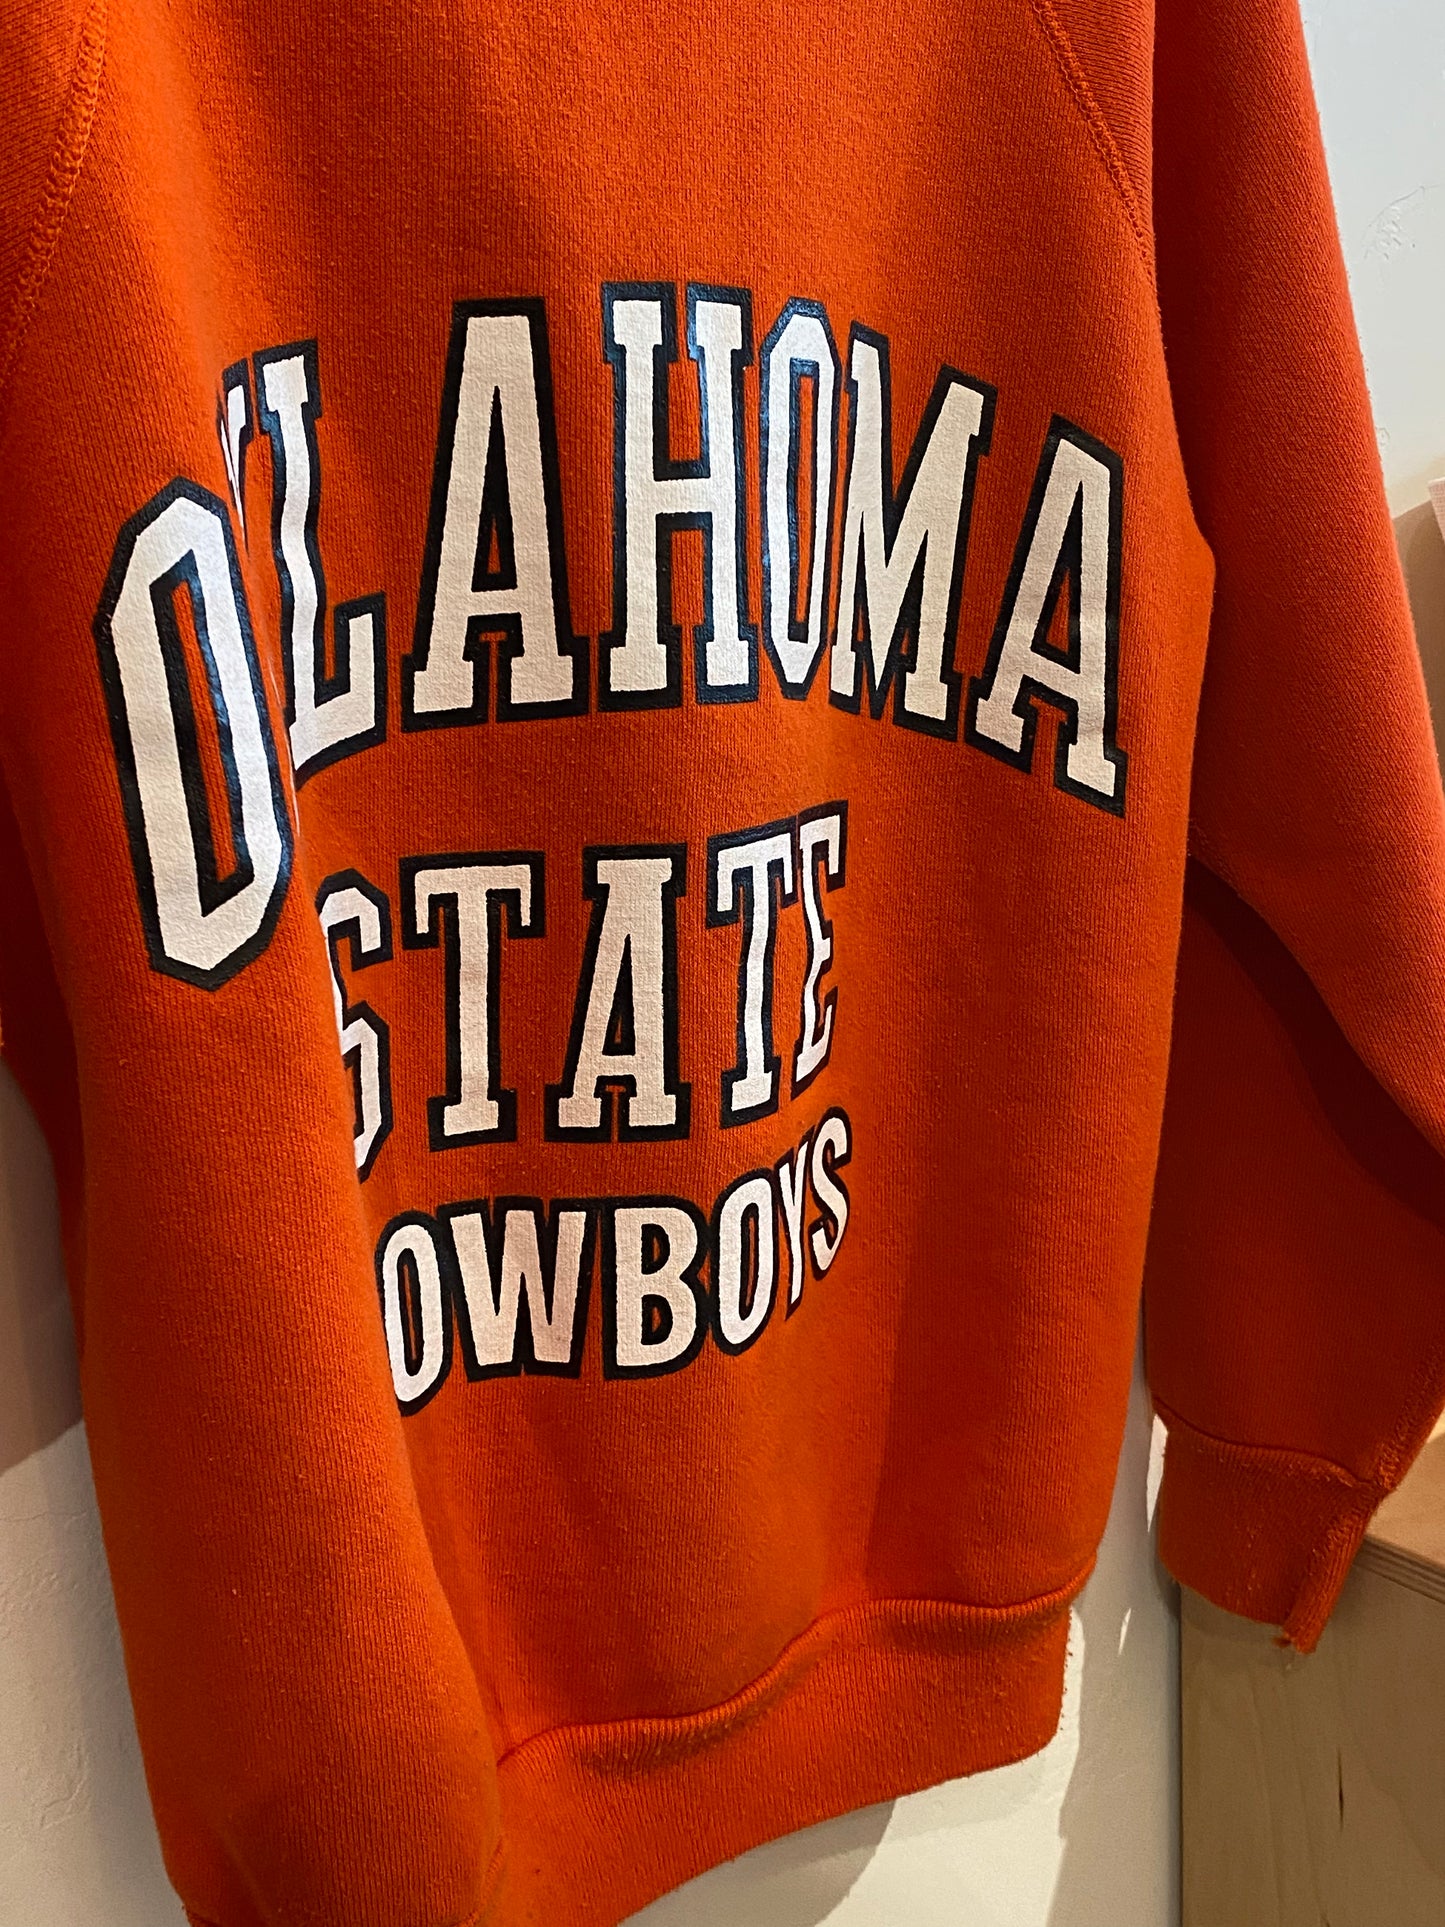 1980s Oklahoma State Cowboys Sweatshirt